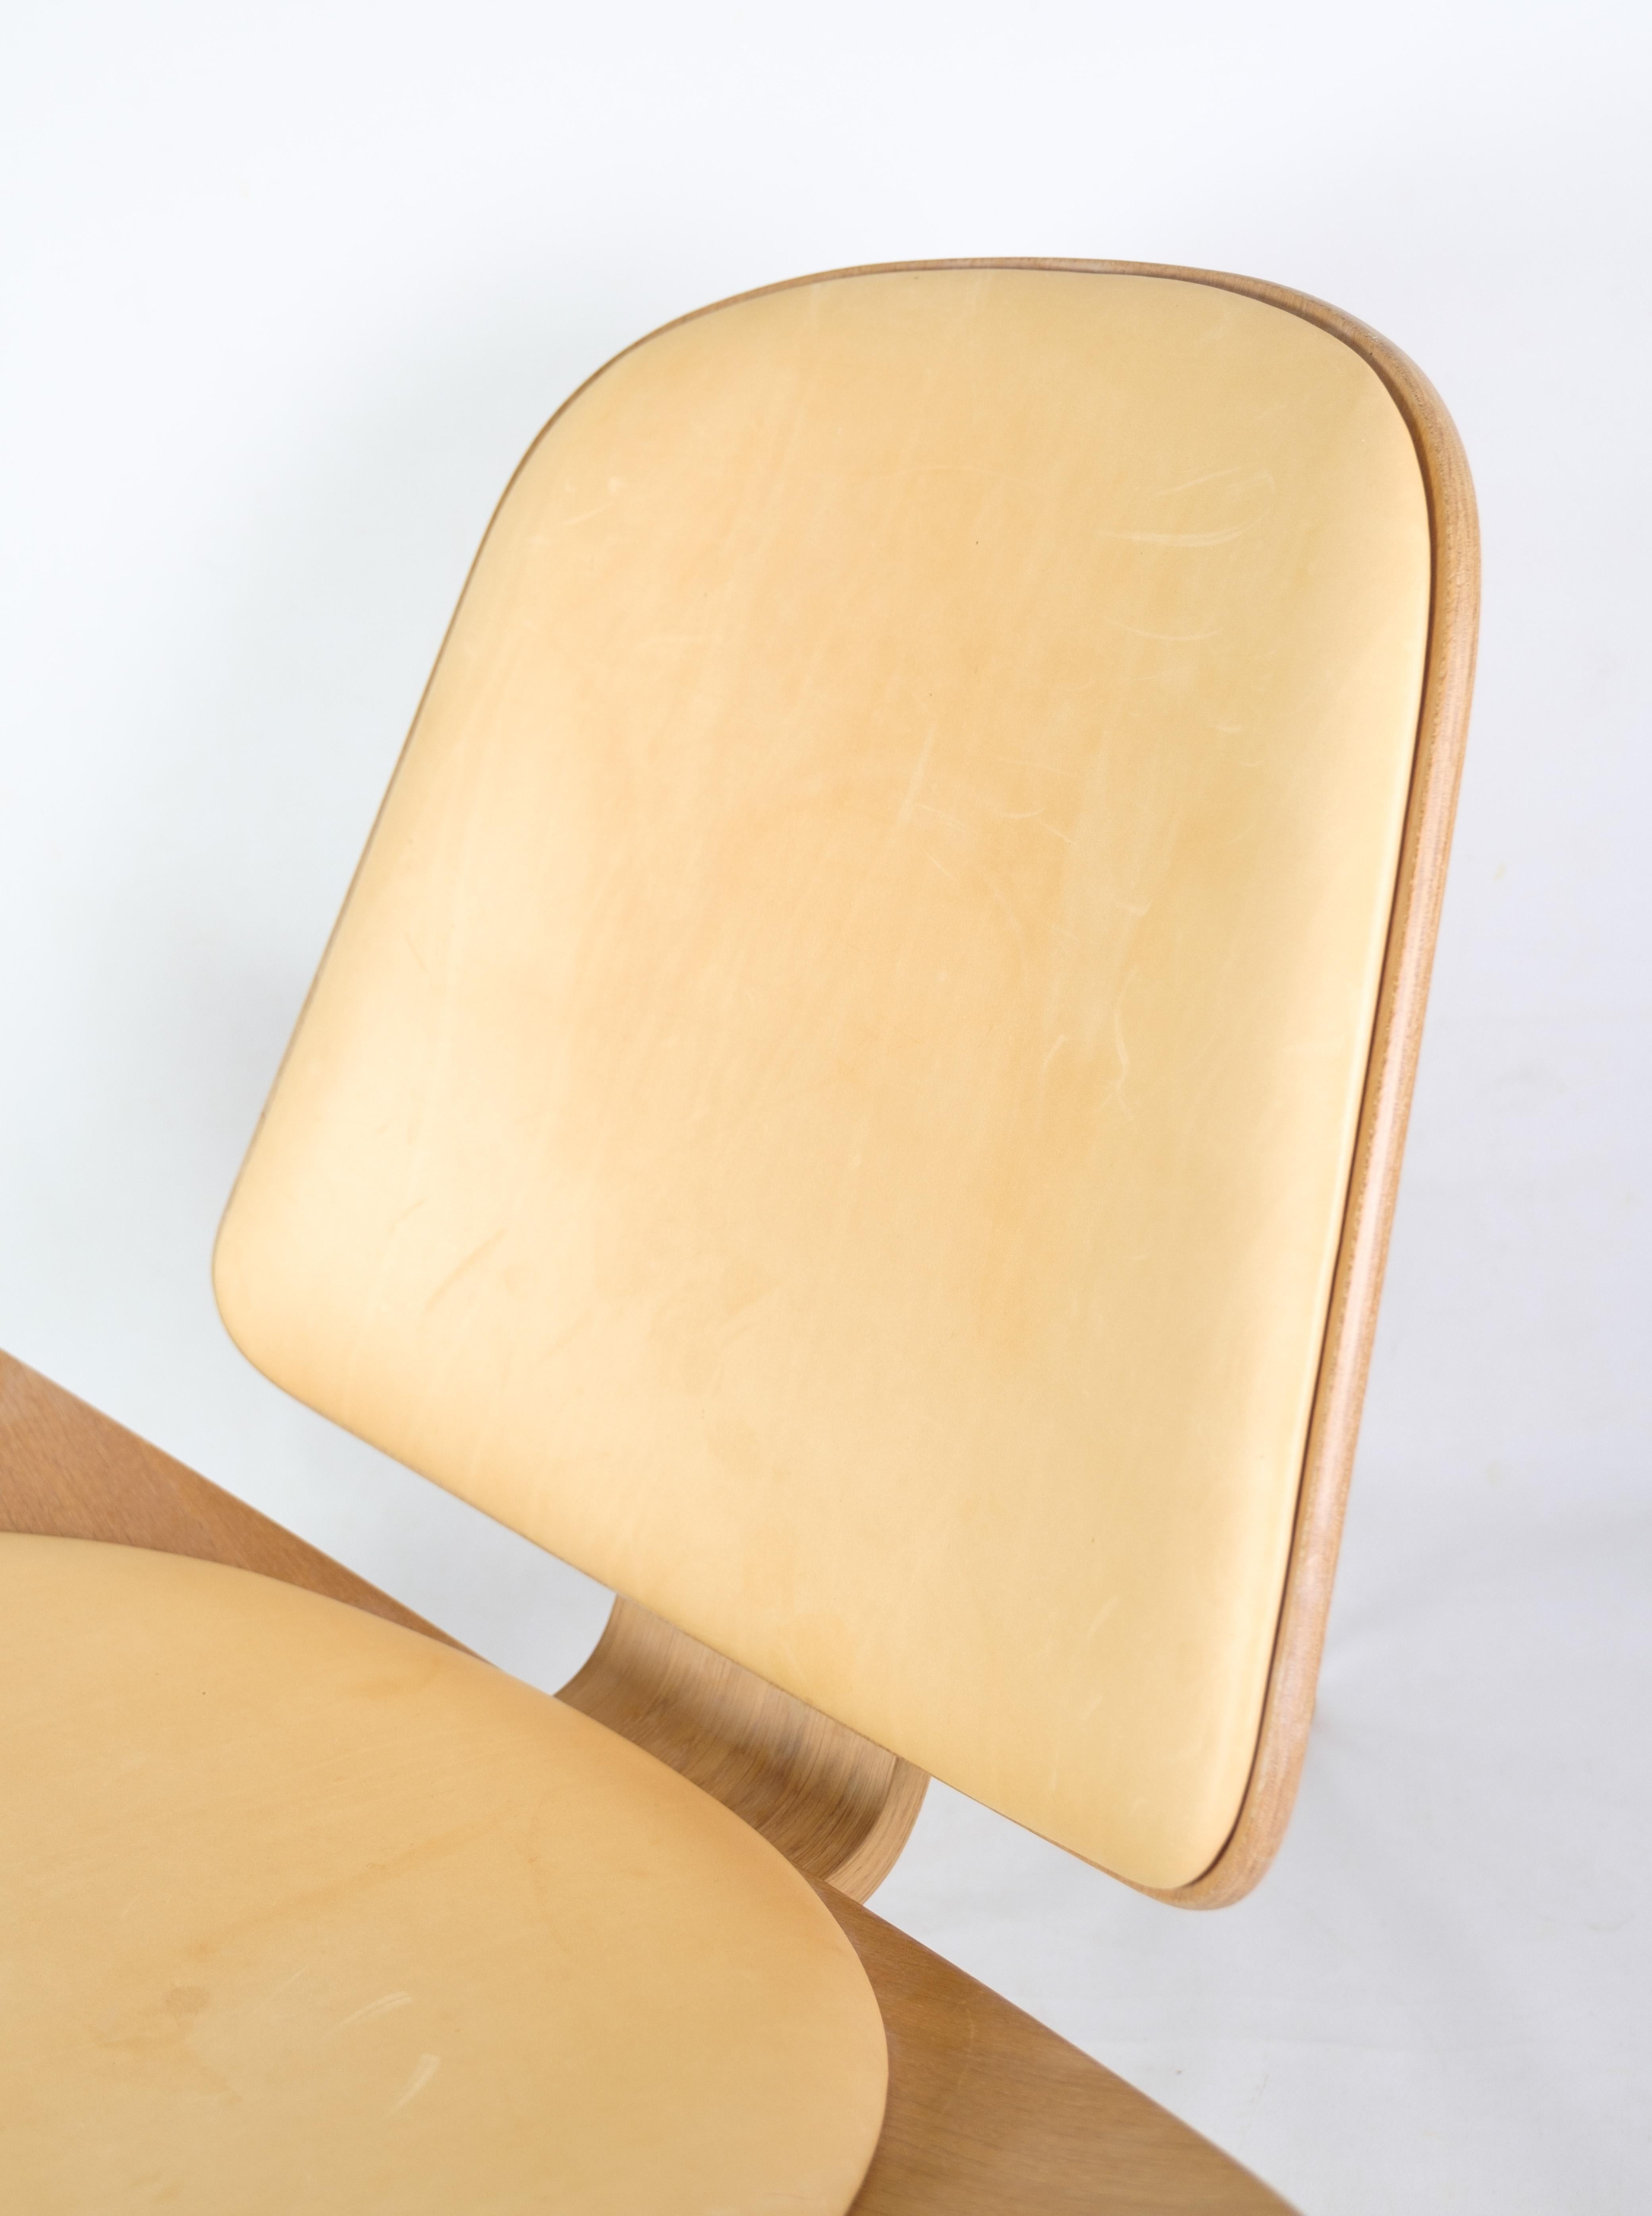 Danish he shell chair model CH07, designed by Hans J. Wegner, made of oak from 2007